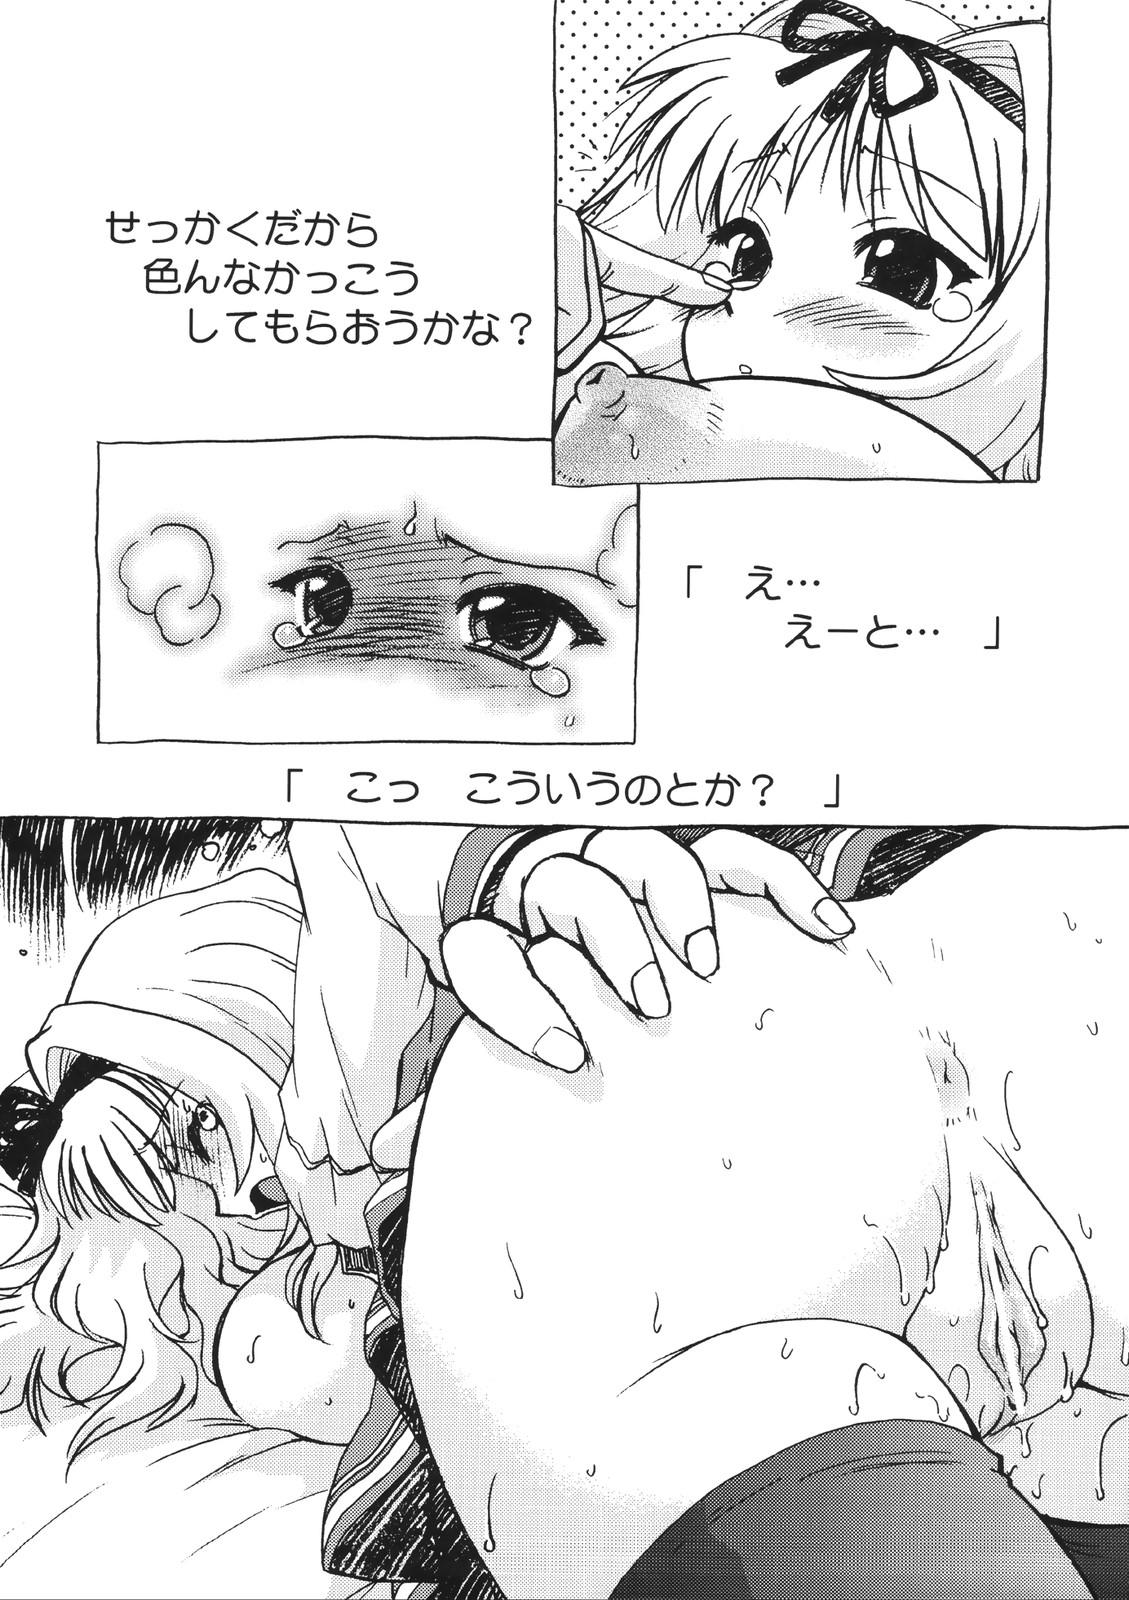 Hot Mom Koharu Biyori 4 - Toheart2 Stunning - Page 11